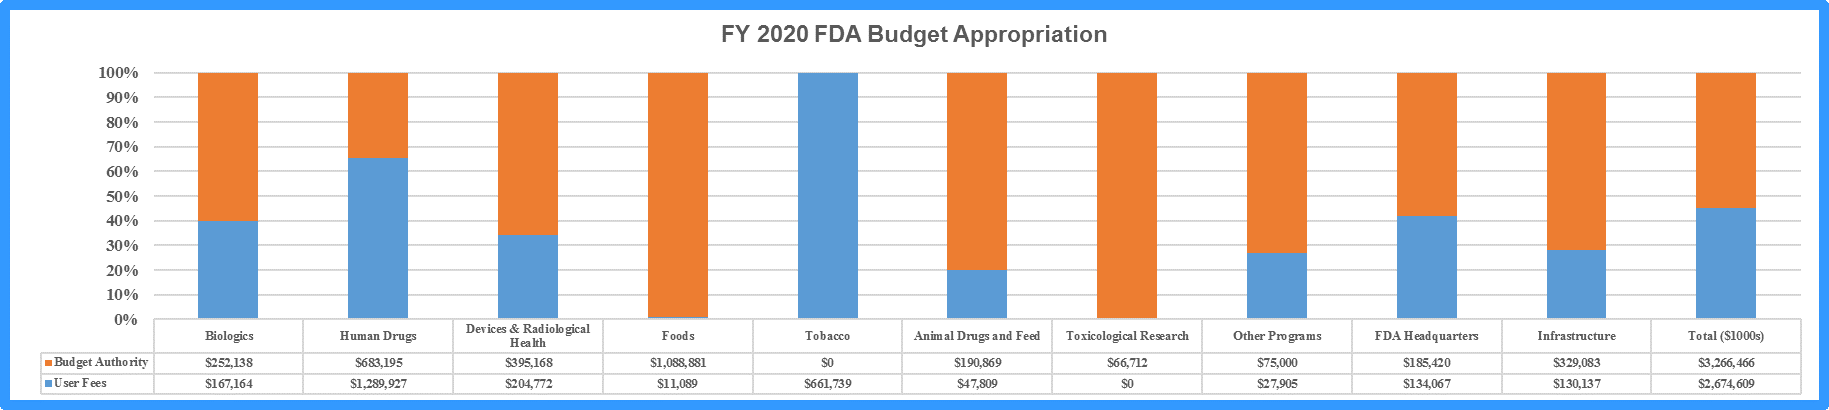 FY 2020 FDA Budget Appropriation